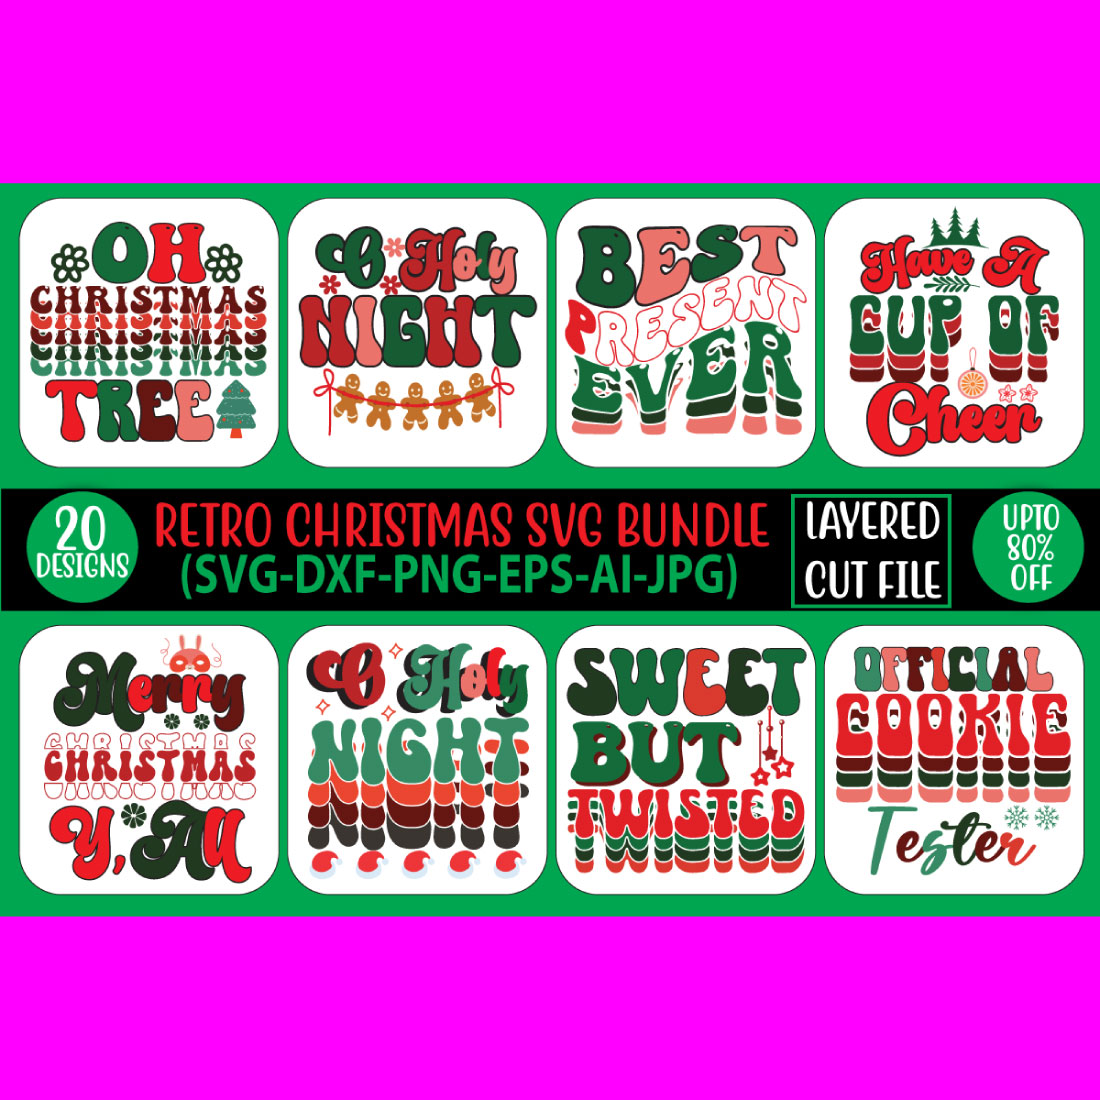 Retro Christmas SVG Bundle cover image.